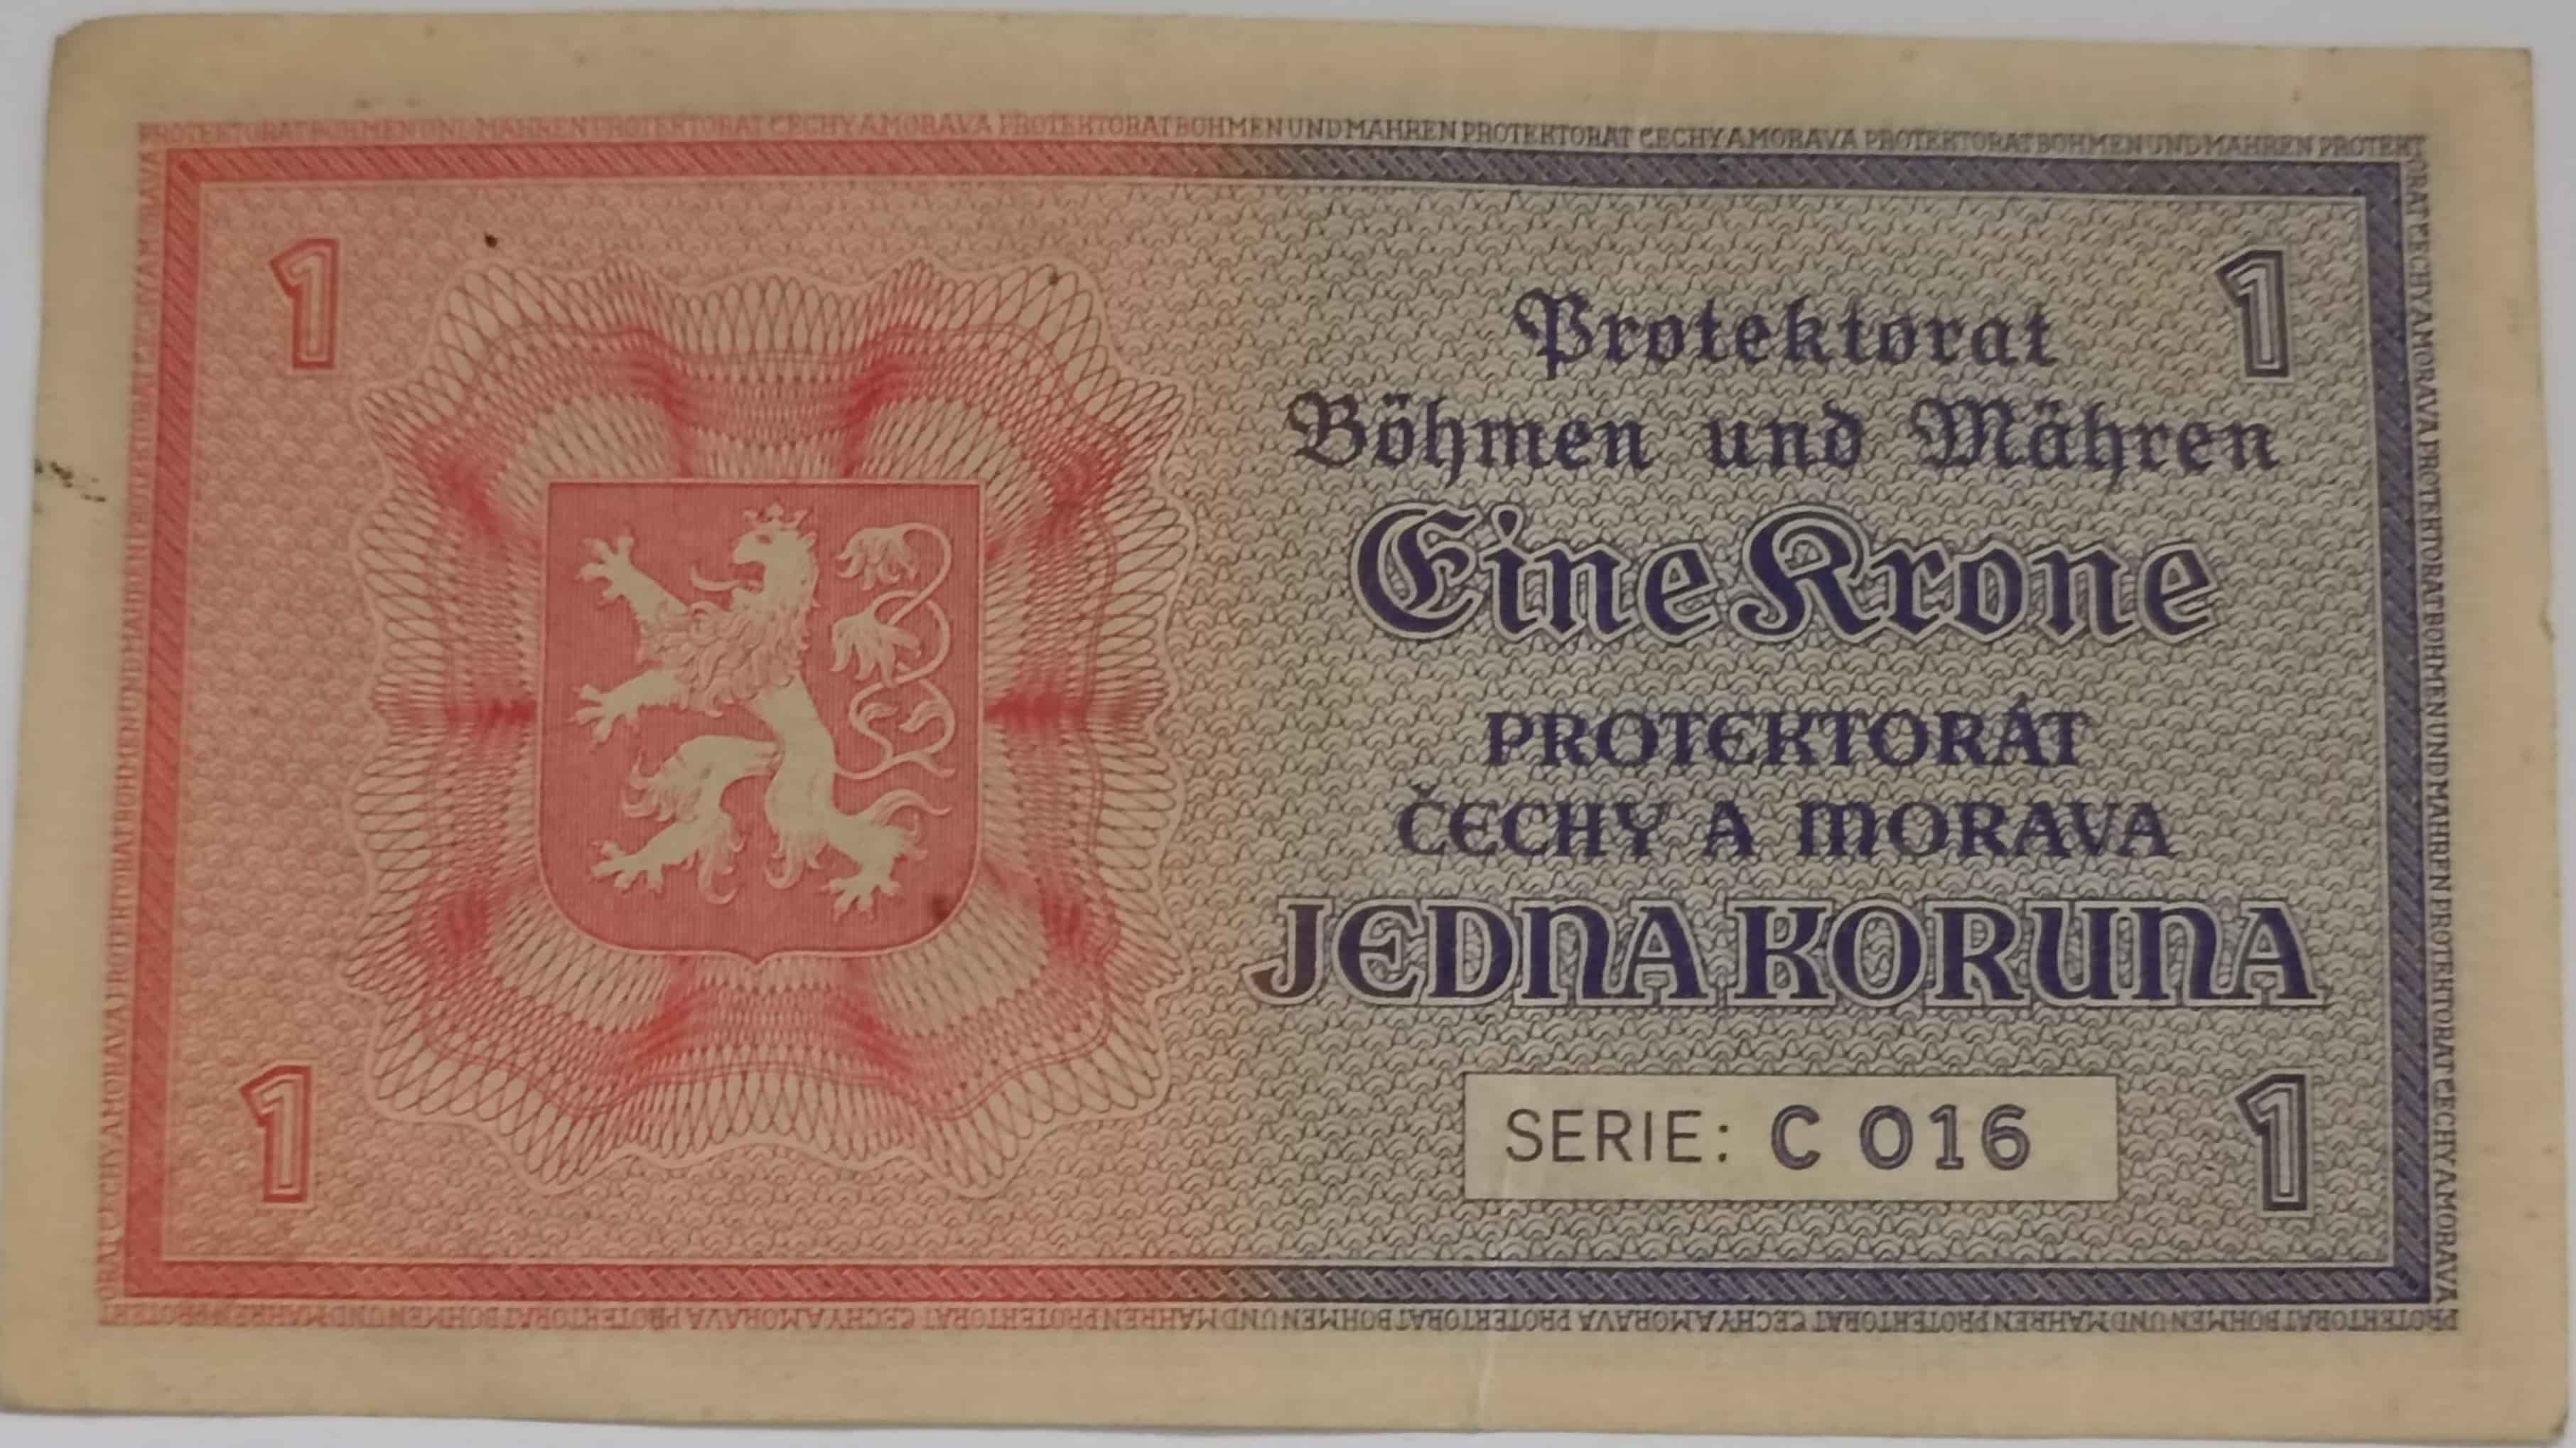 1 koruna 1940 C016